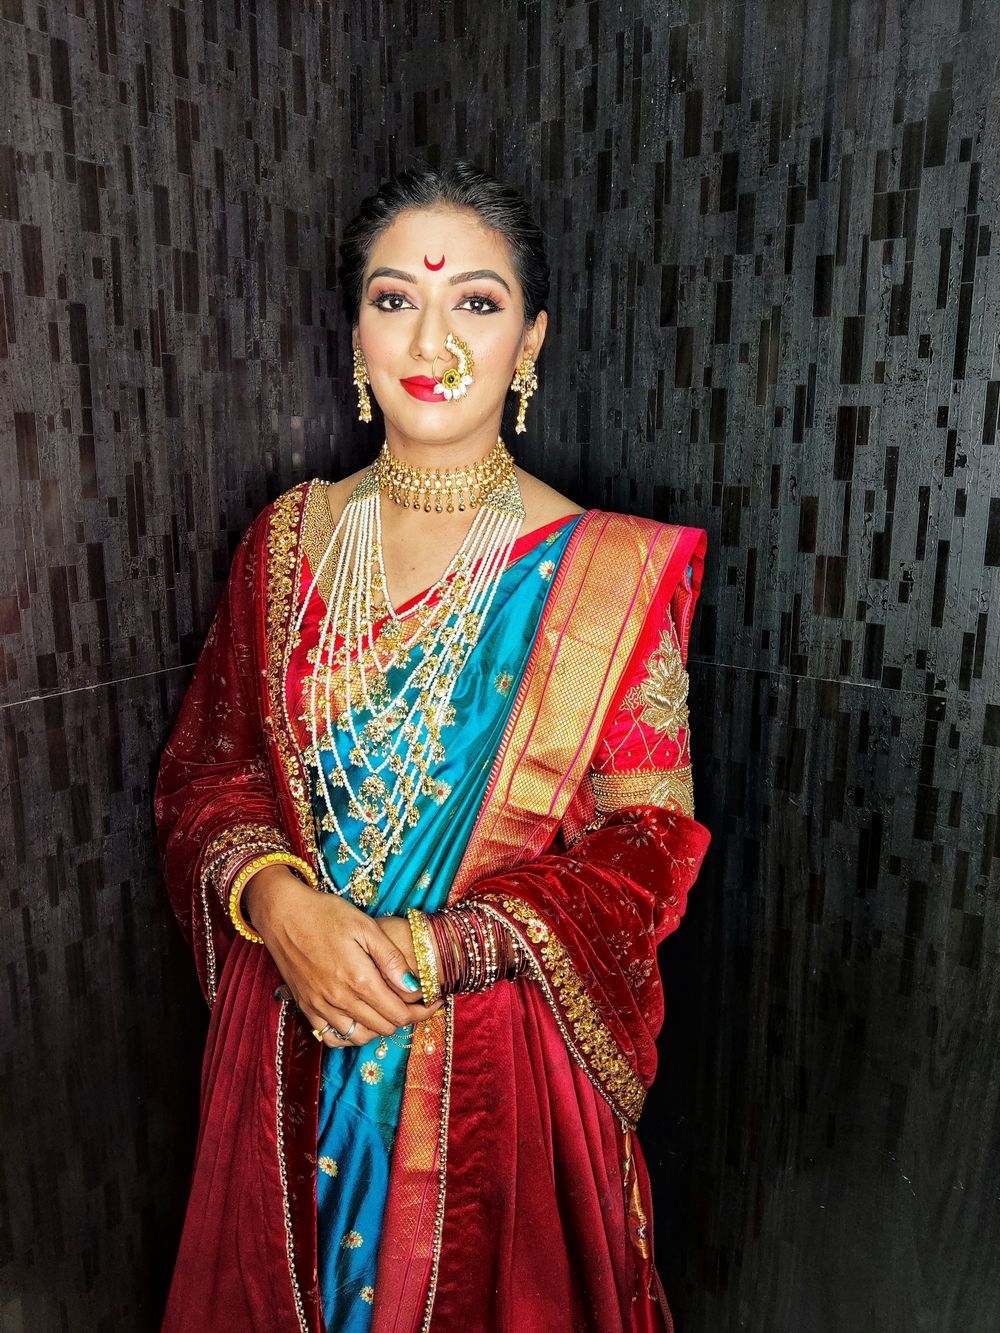 Photo From Maharashtrian Brides - By Mahi Makeup Studio and Salon